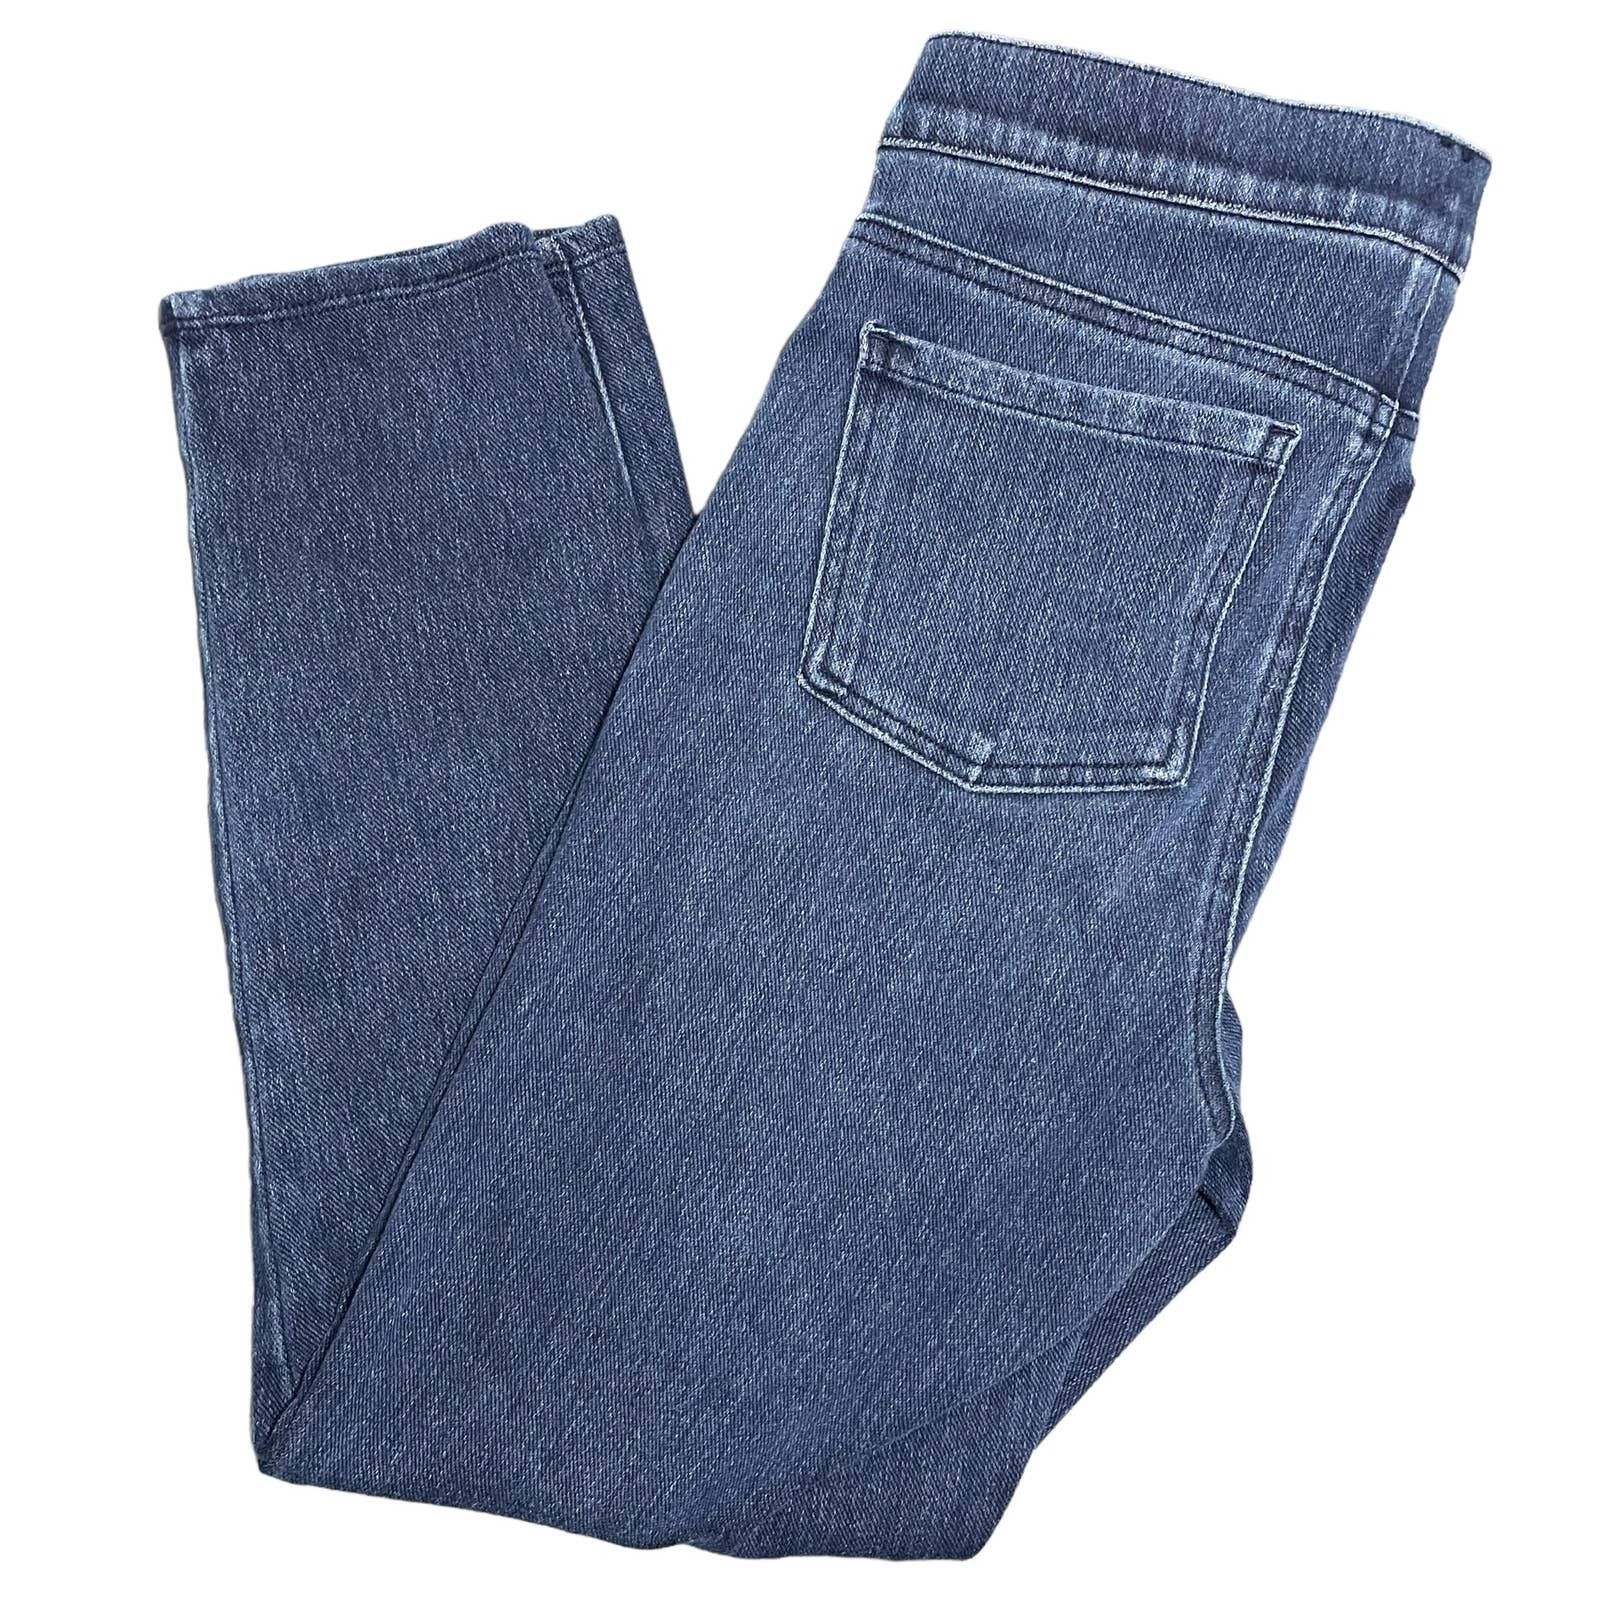 Spanx Petite jean-ish ankle leggings in indigo